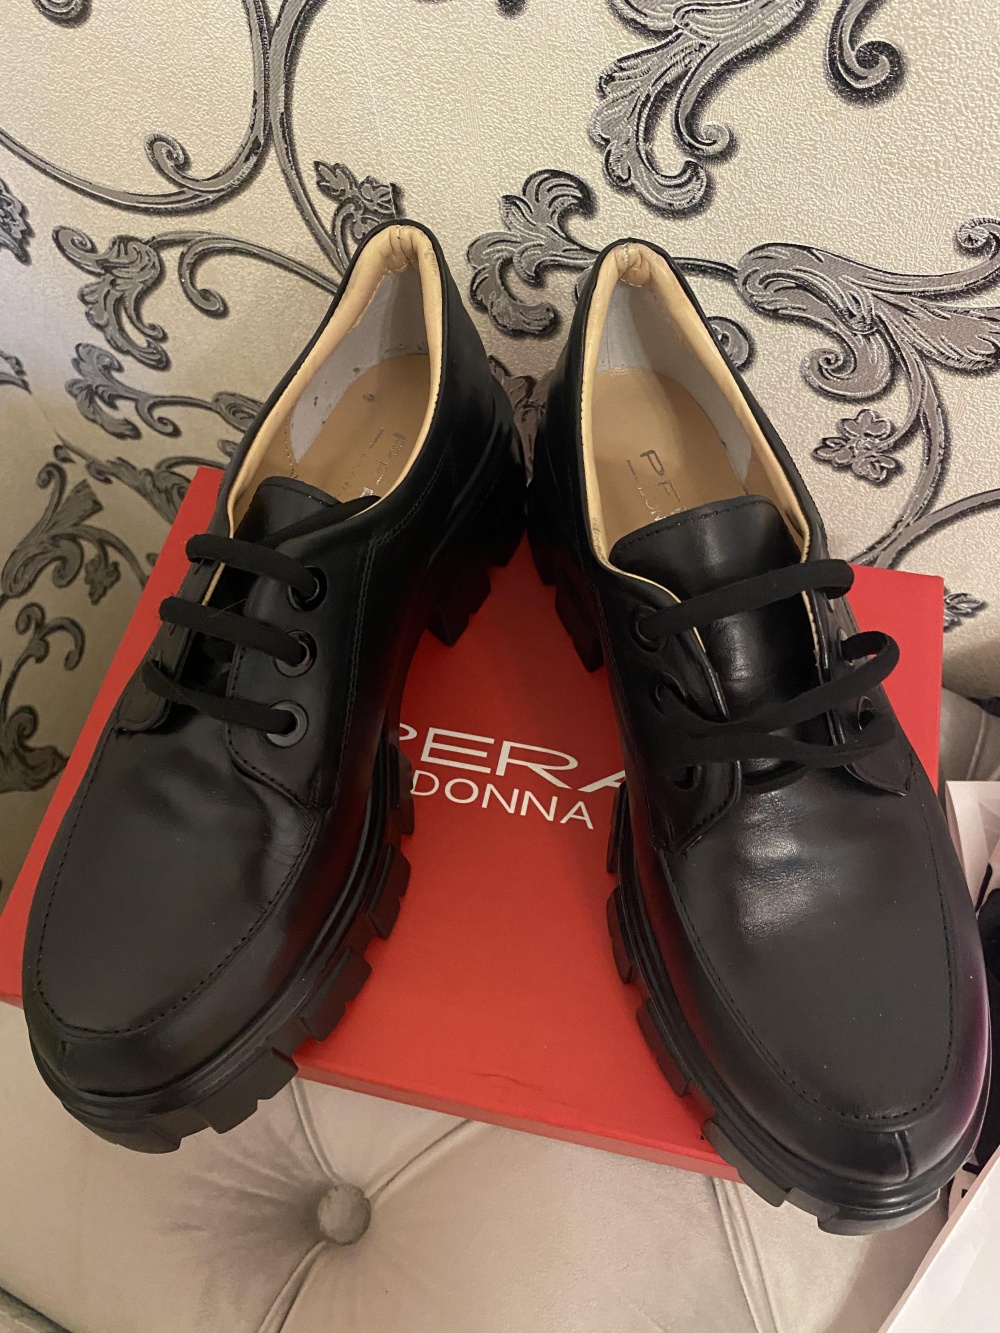 Ботинки Pera Donna, 39-40